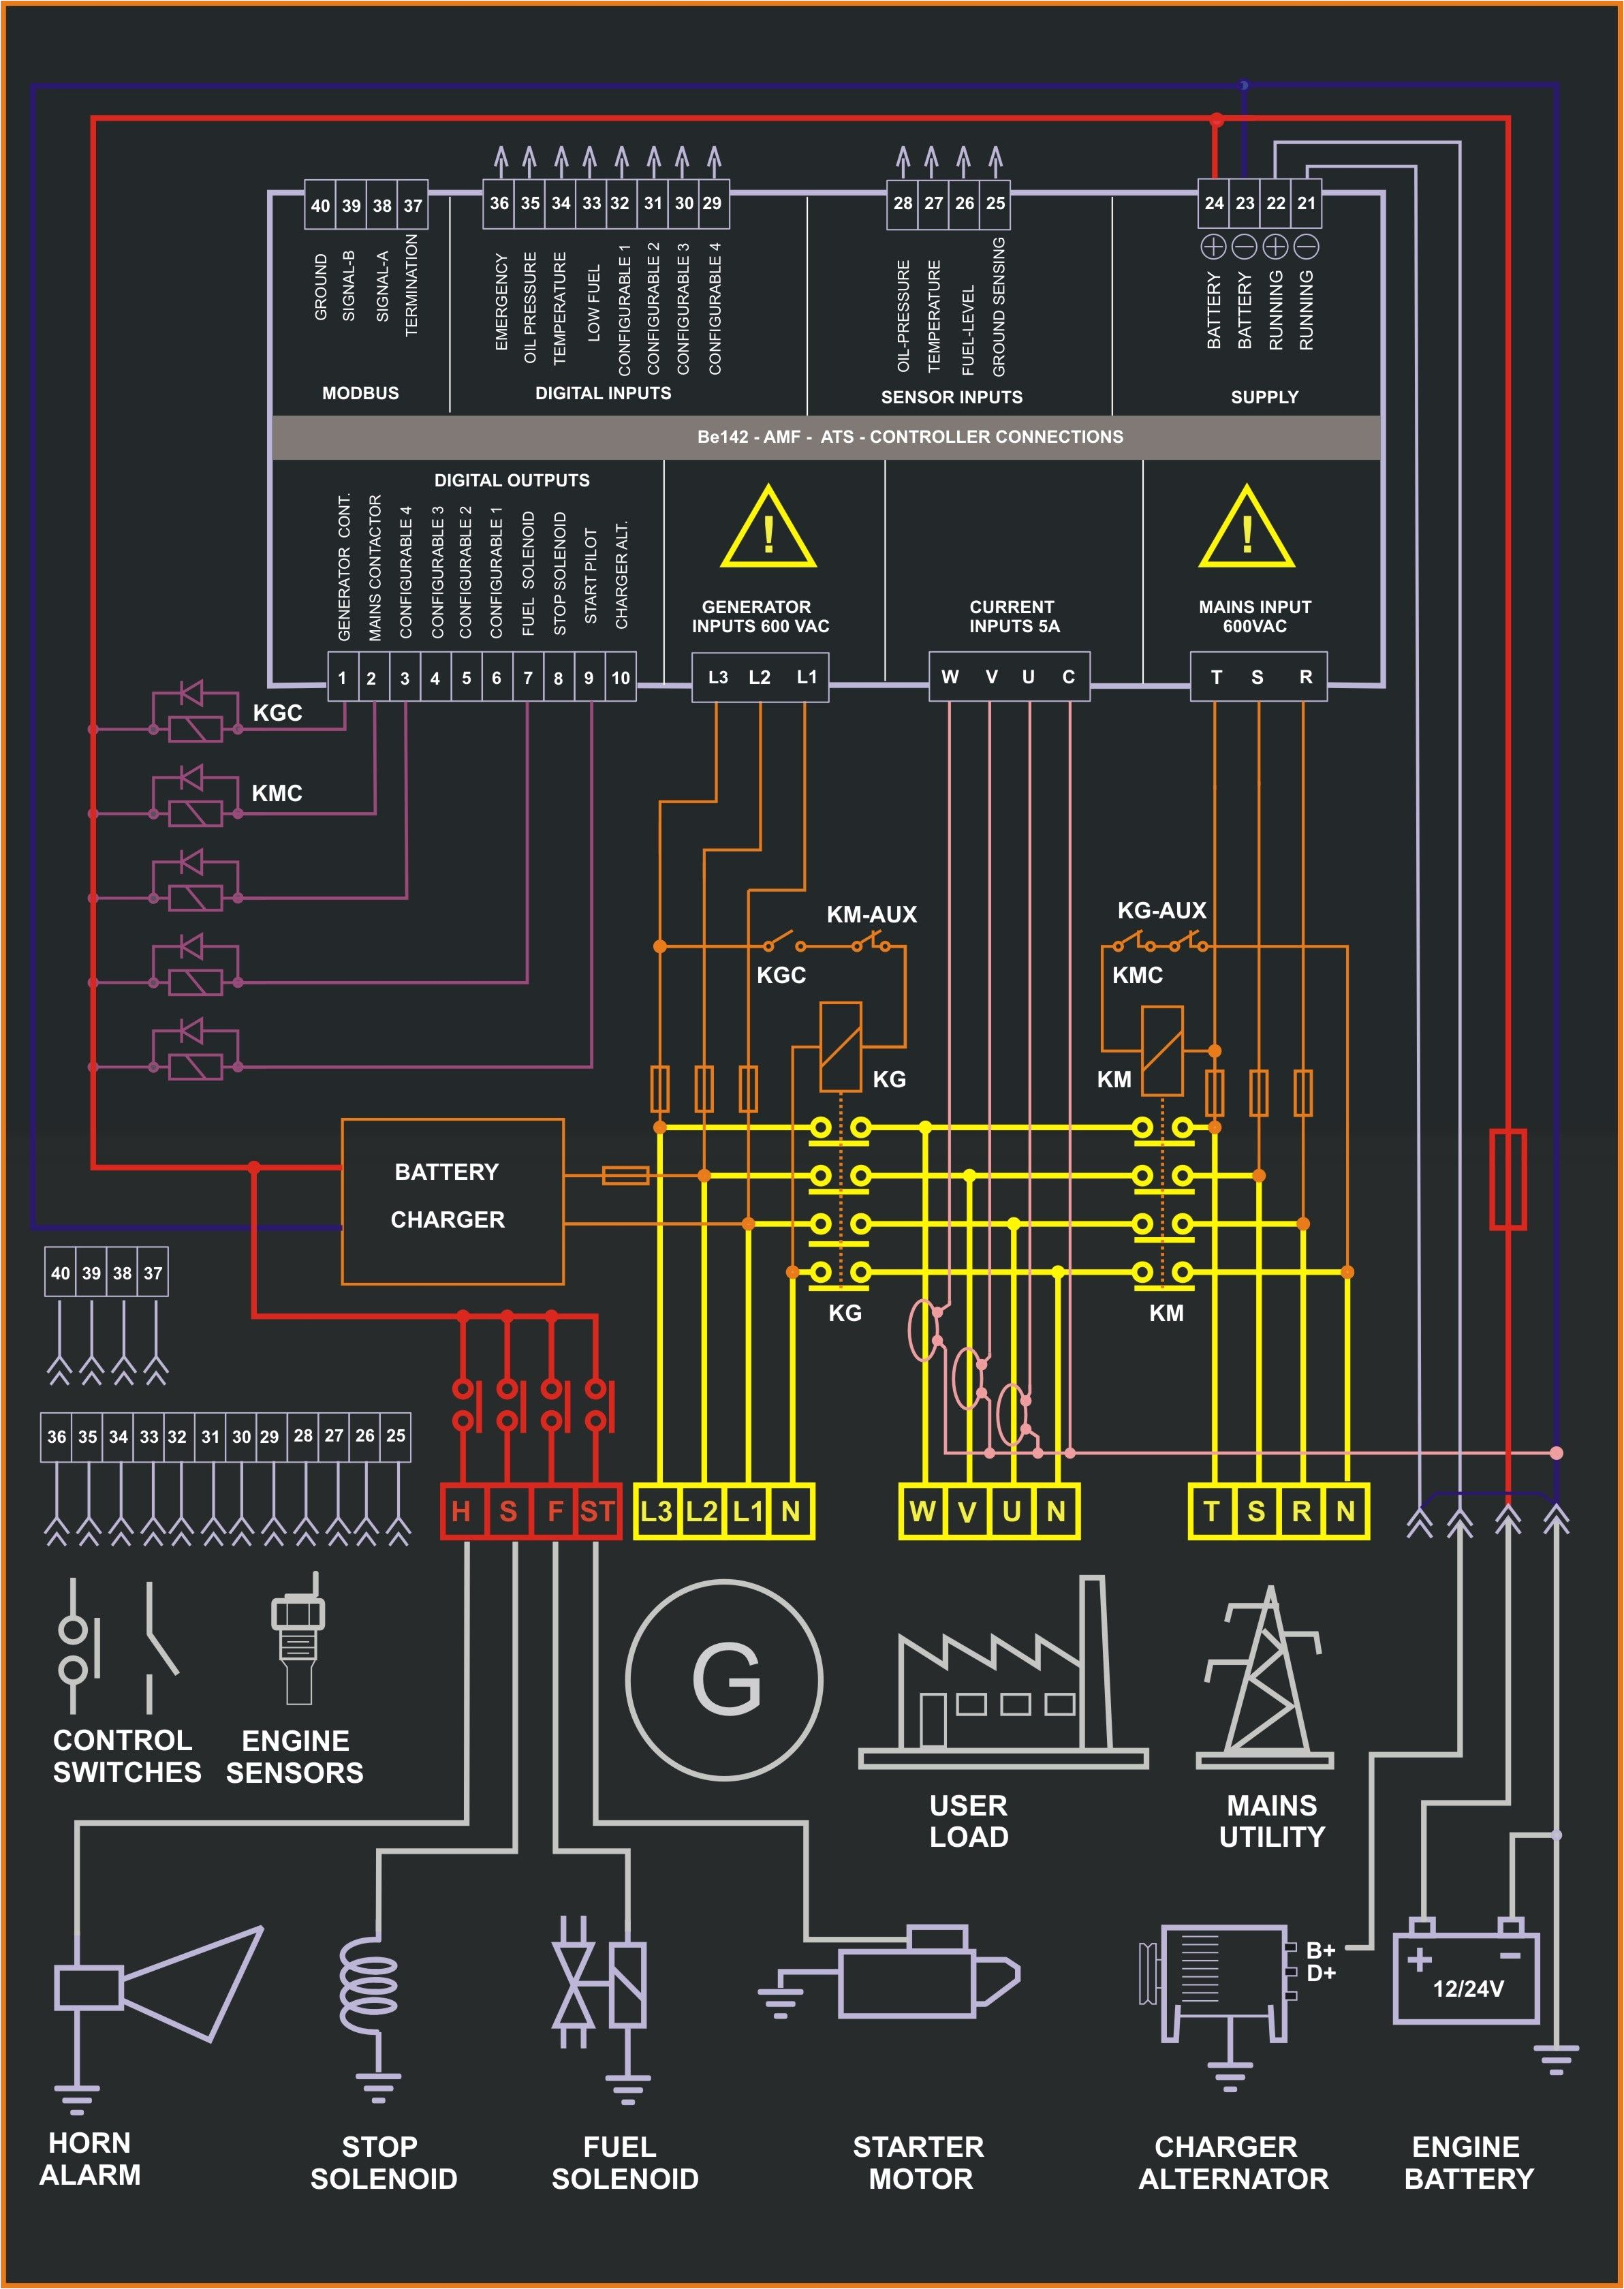 electrical panel board wiring diagram pdf fresh 41 awesome circuit lighting control panel wiring diagram pdf control wiring diagram pdf